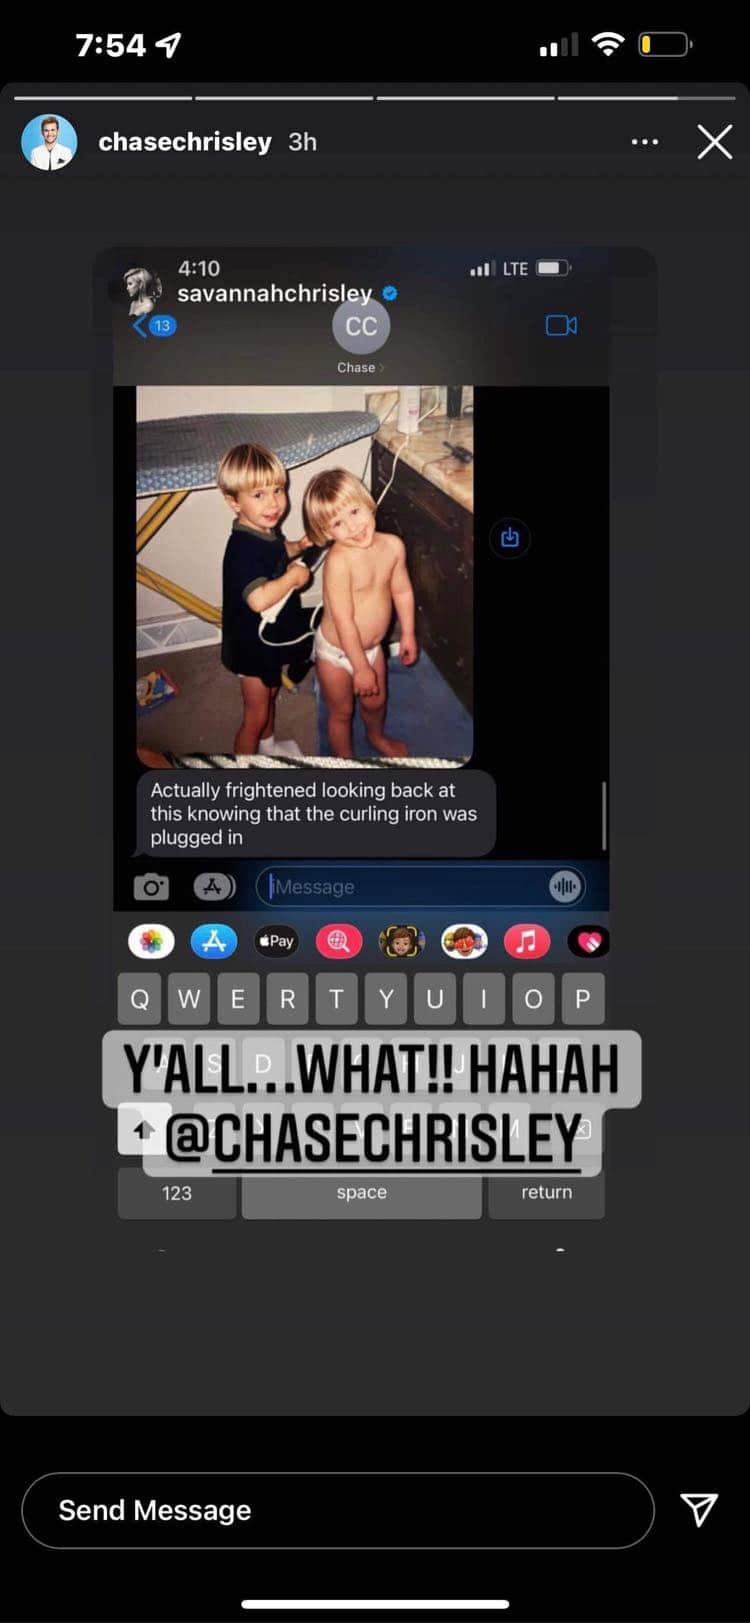 Chase Chrisley Shares Old Chrisley Family Photo [Credit: Chase Chrisley/Instagram Stories]